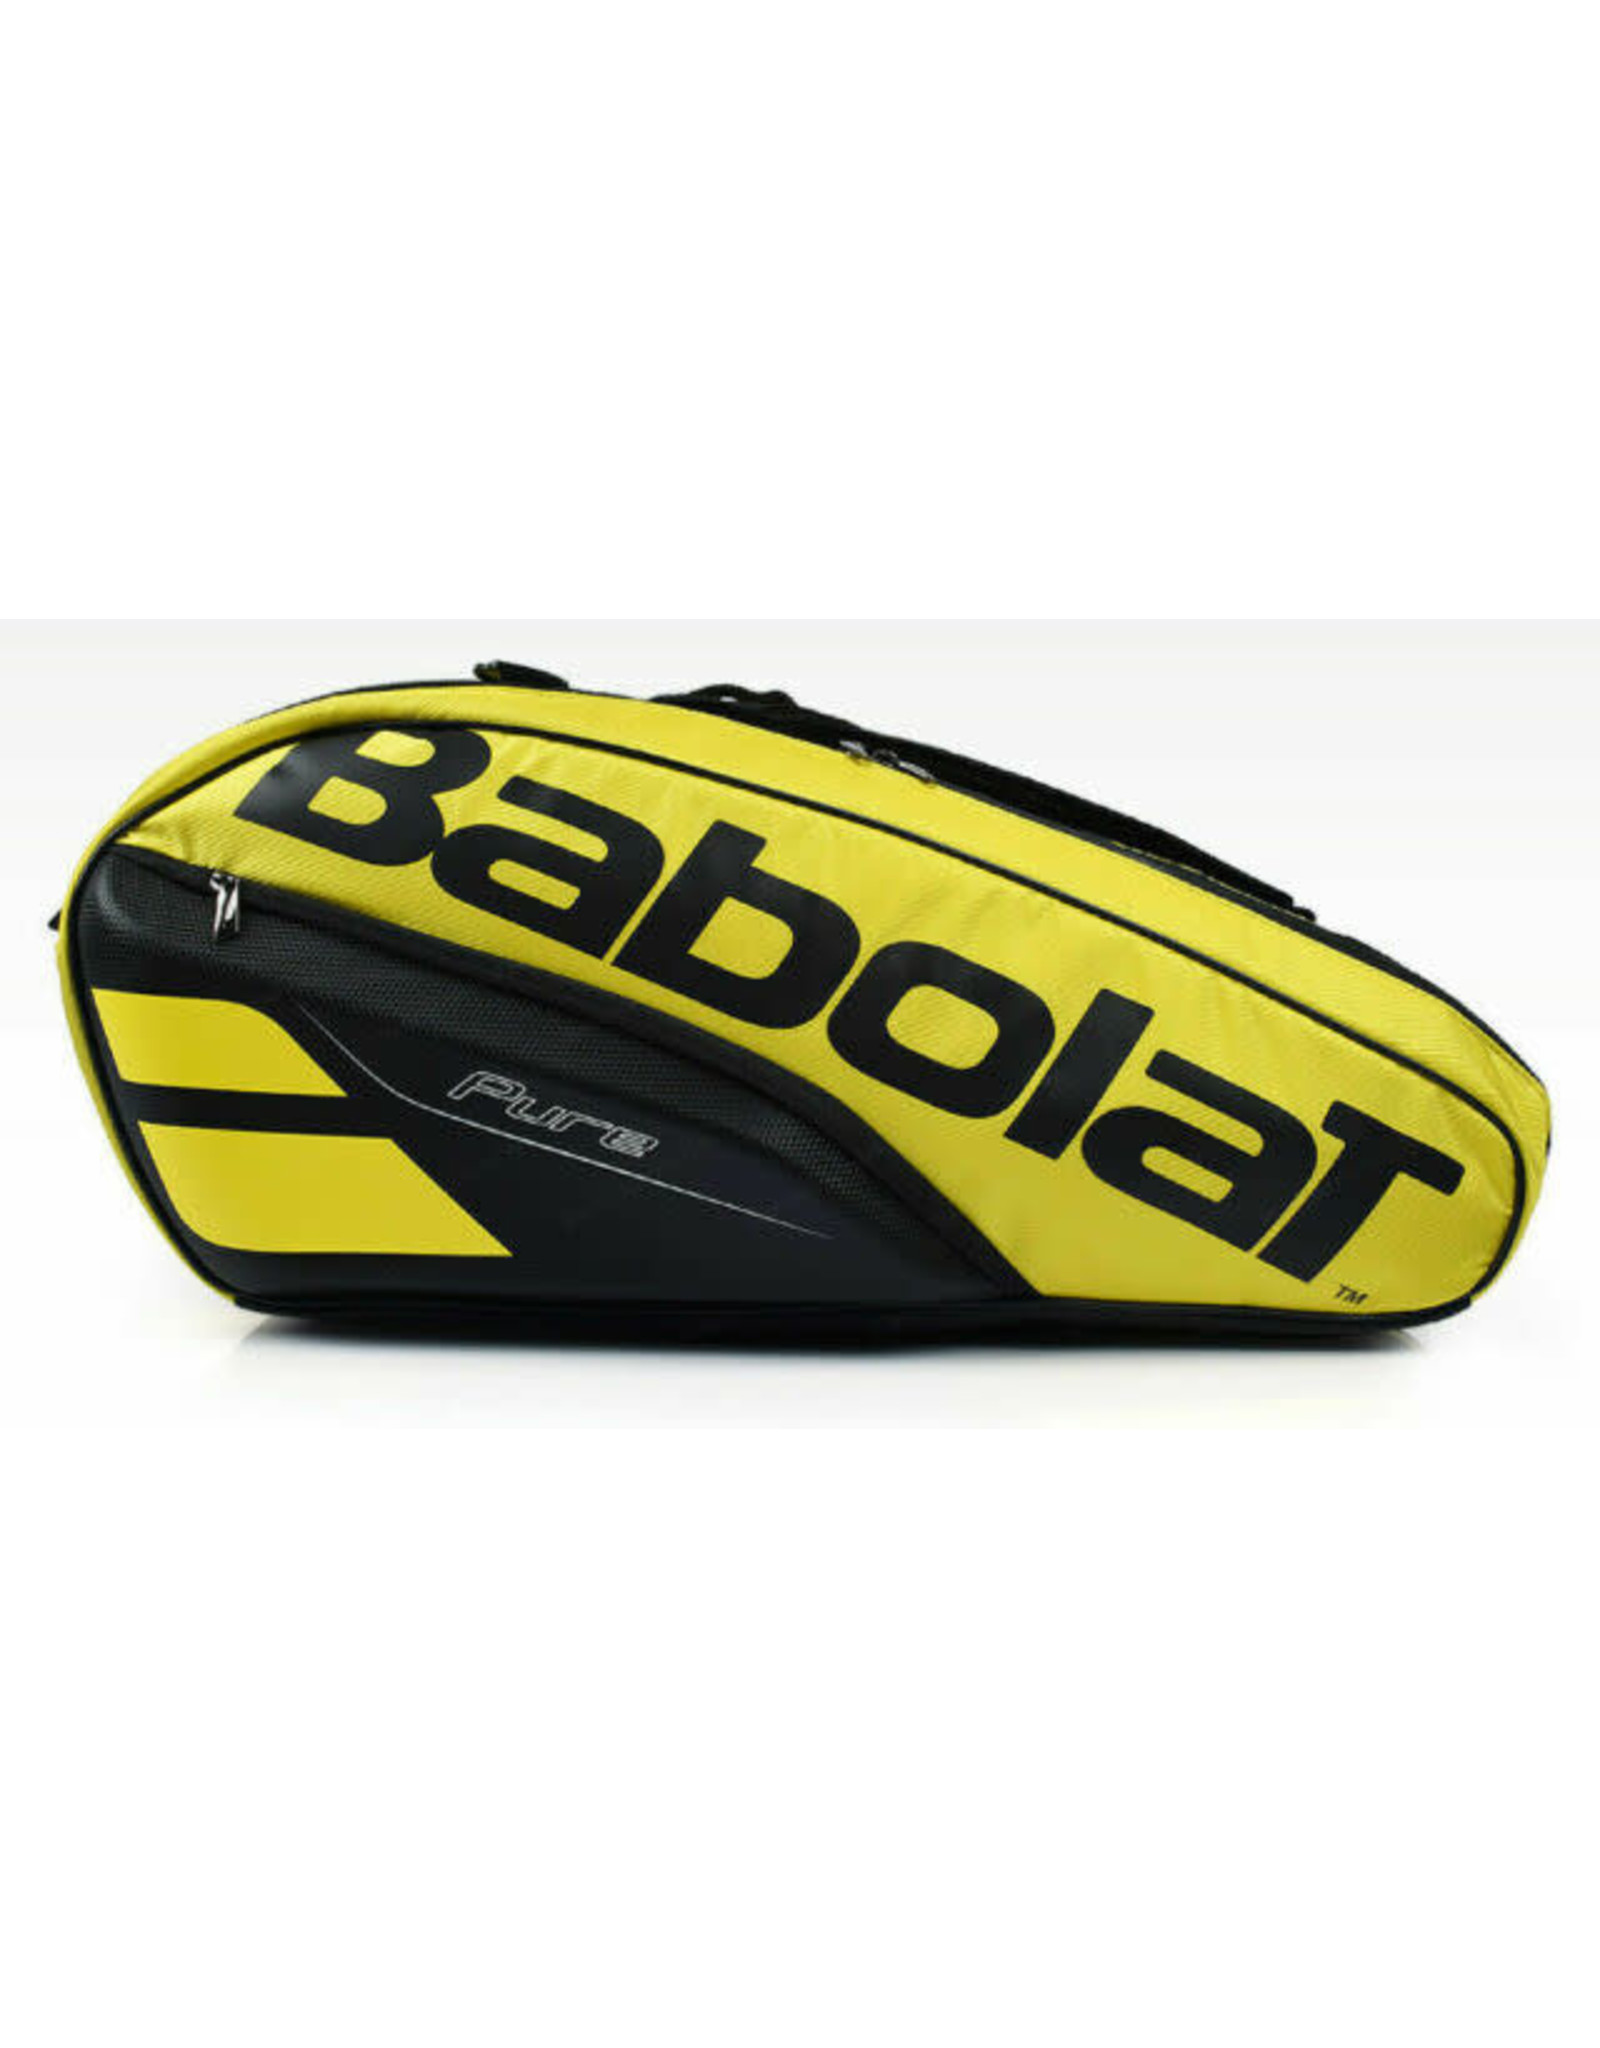 Babolat RHX12 Pure Aero Yellow Black 191